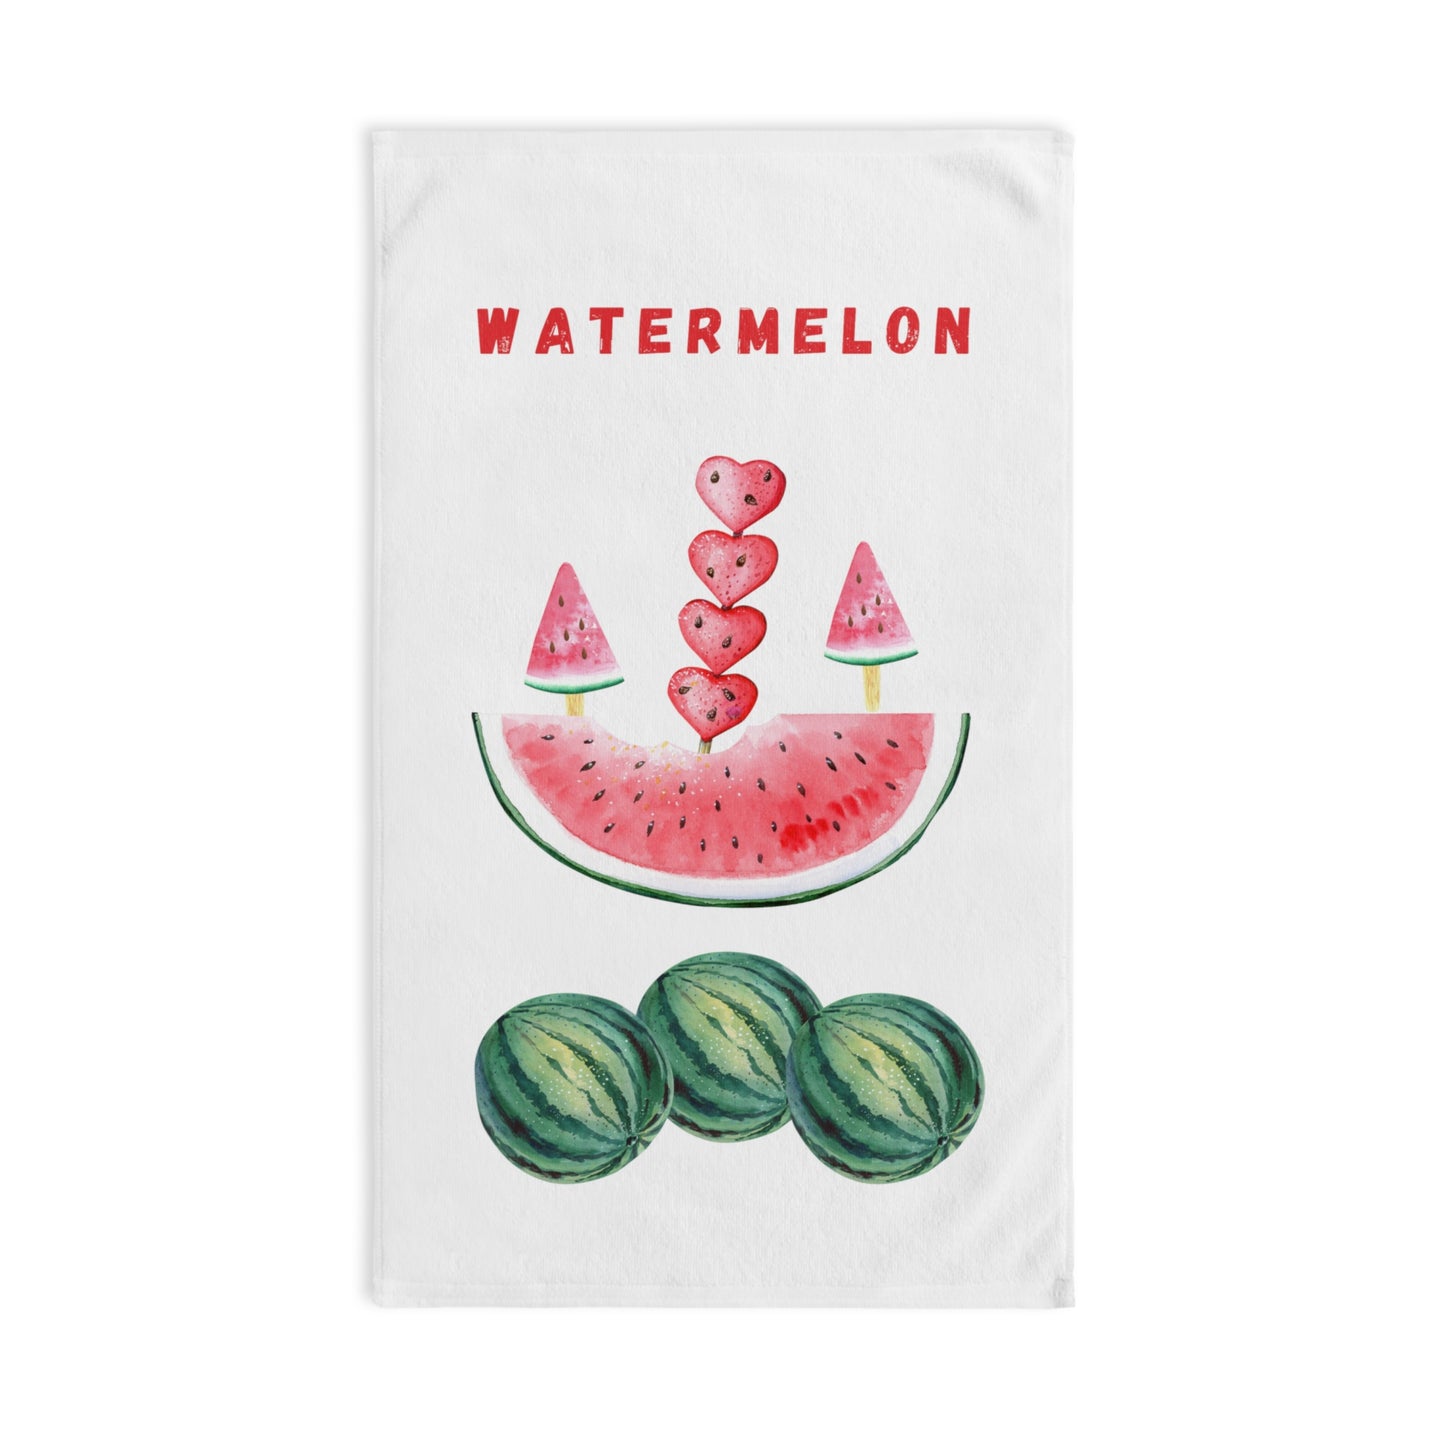 Watermelon Theme Hand Towel, Cup Towel, Tea Towel by PC Designs